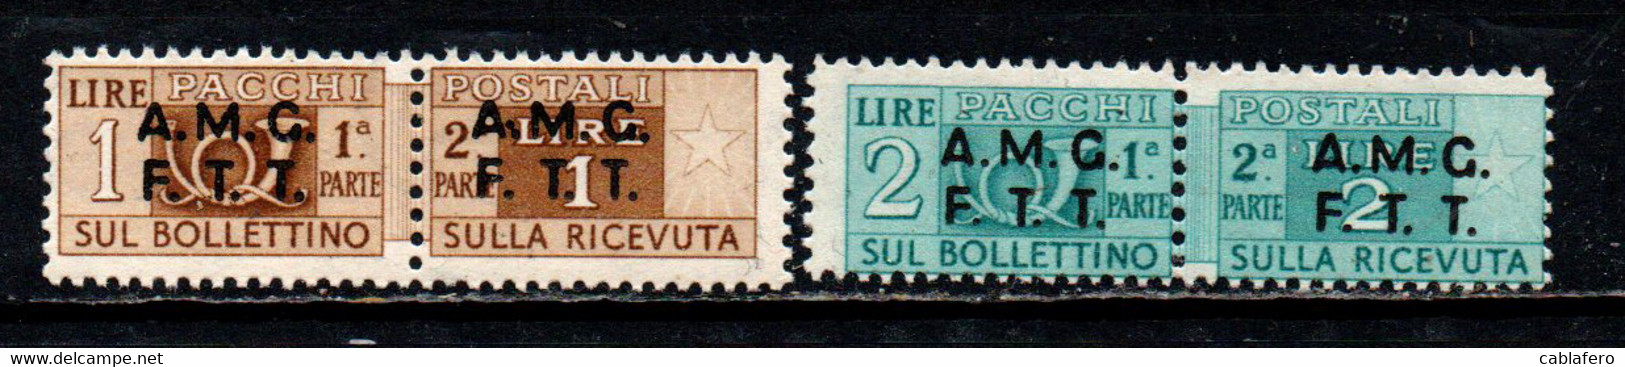 TRIESTE - AMGFTT - 1947 - PACCHI POSTALI - SOVRASTAMPA SU DUE LINEE - 1 E 2 LIRE - MNH - Postpaketen/concessie